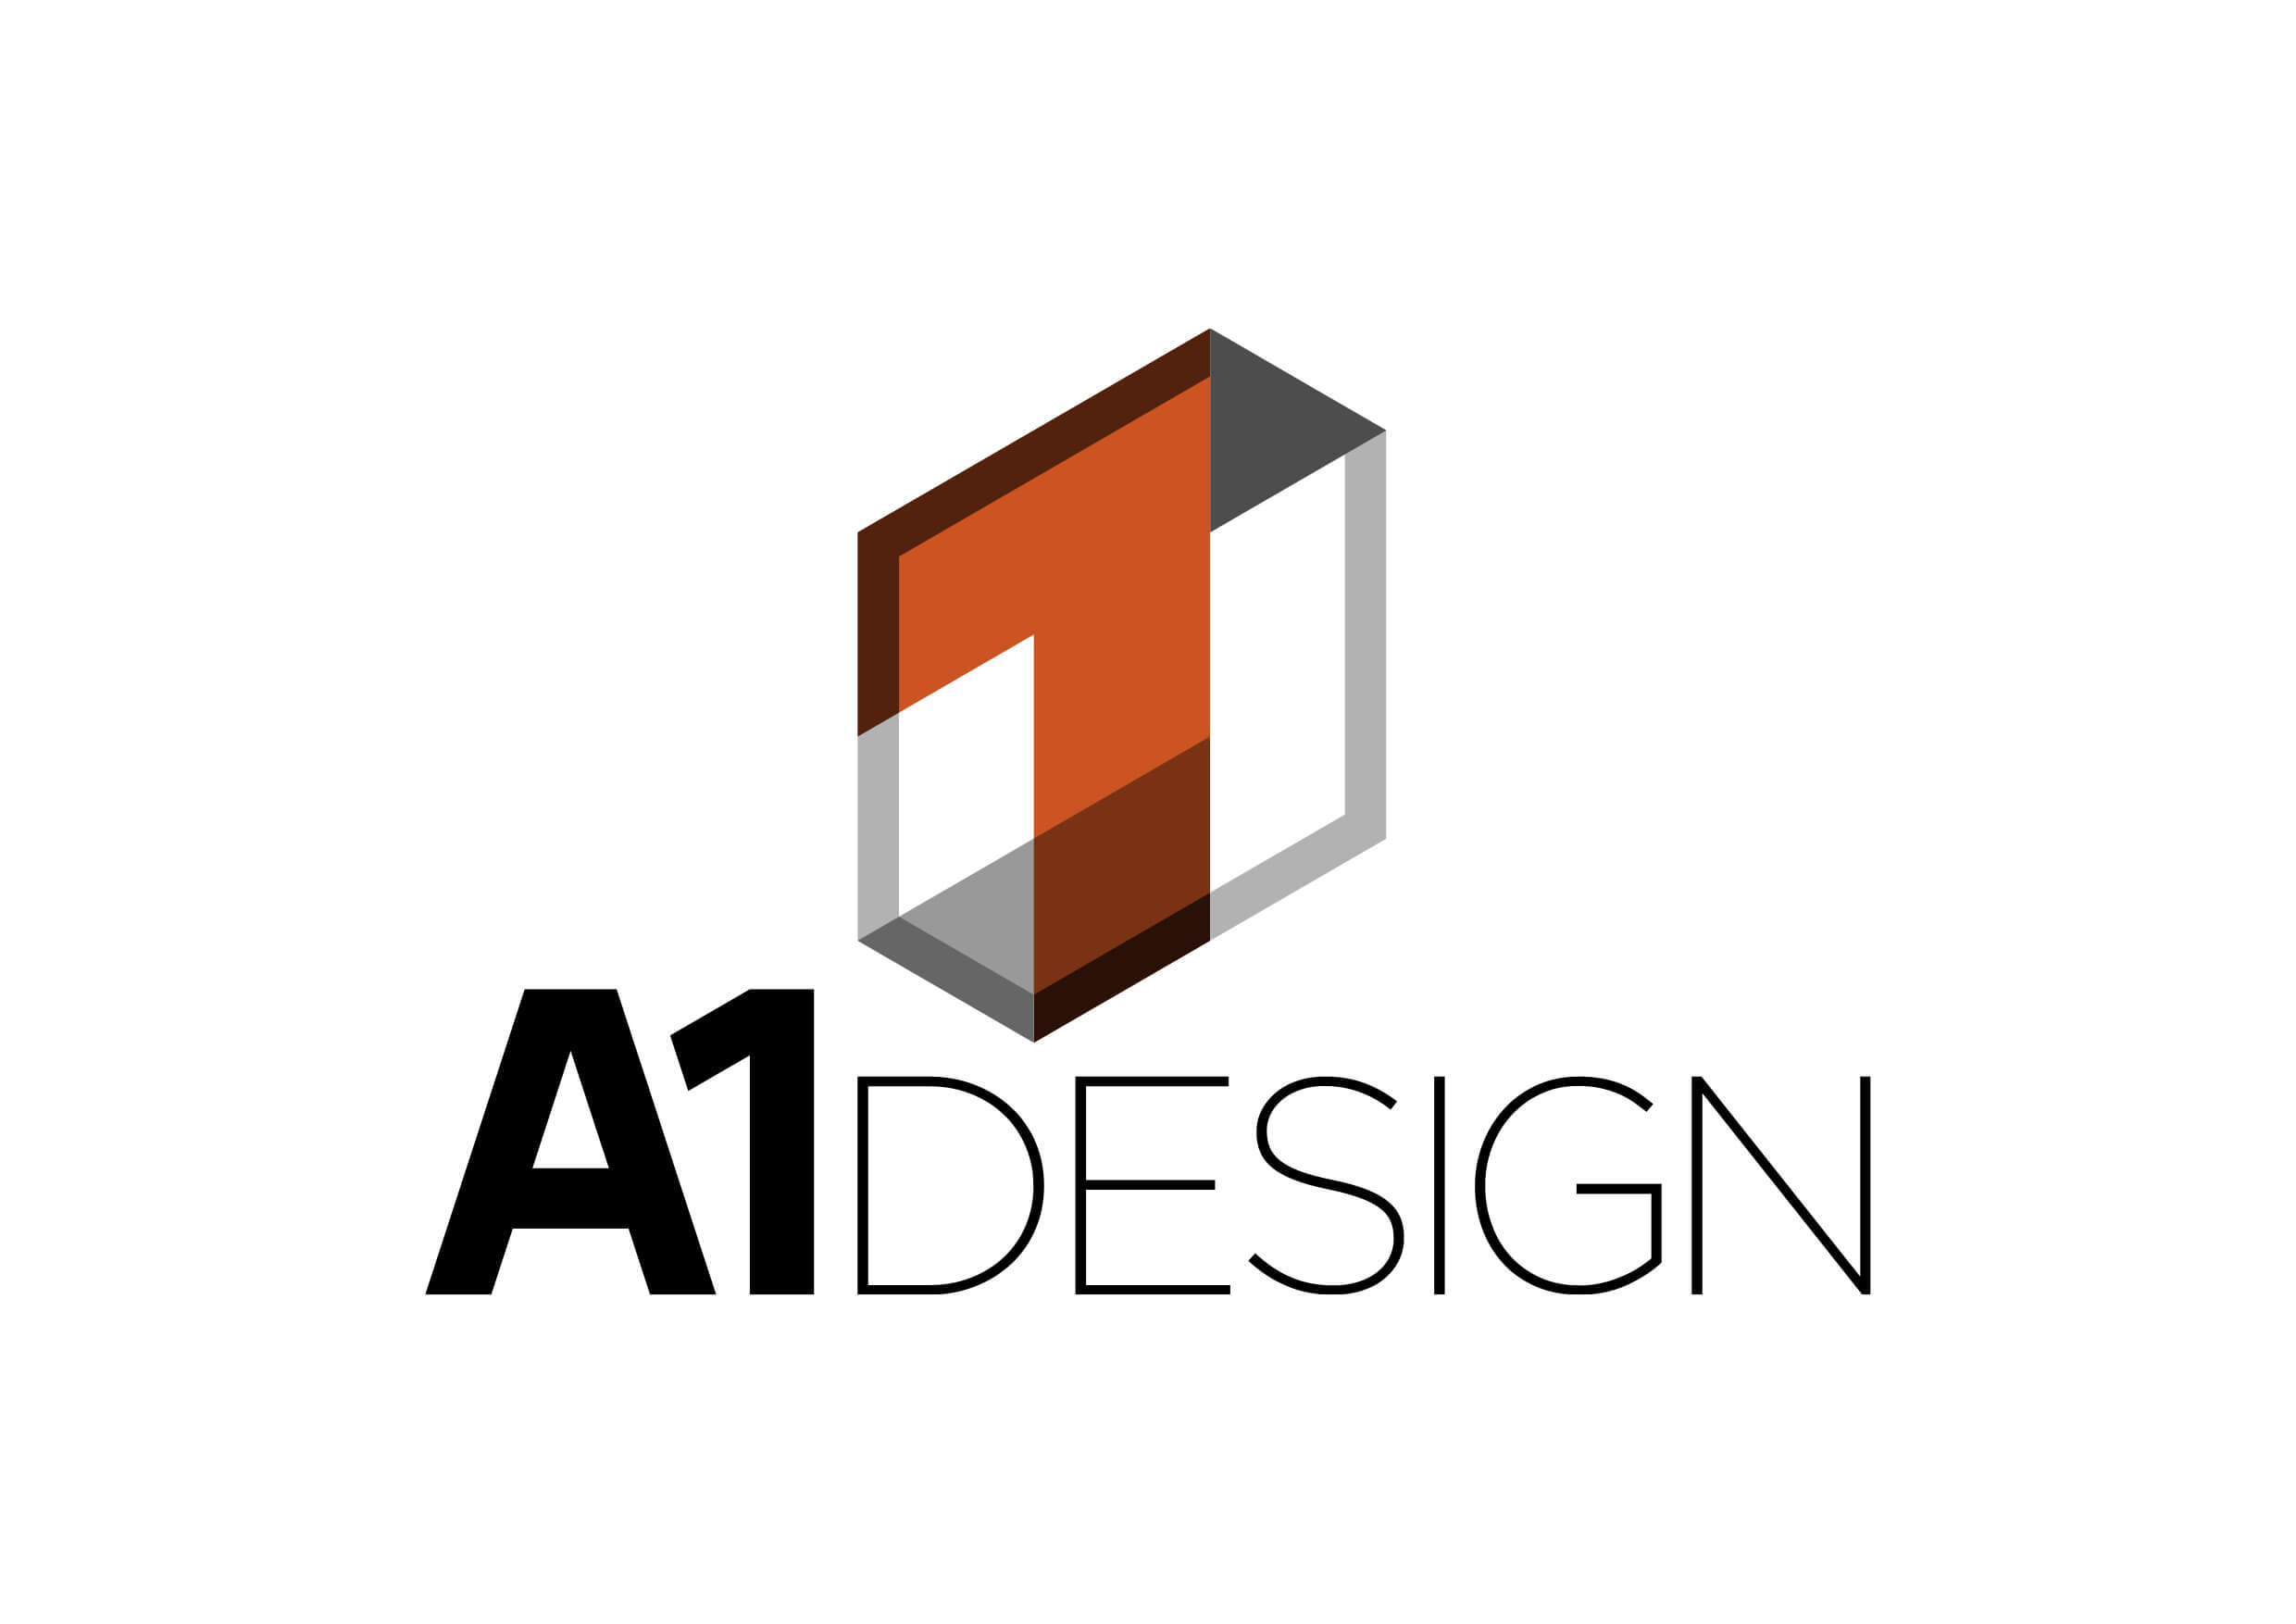 A1 Design